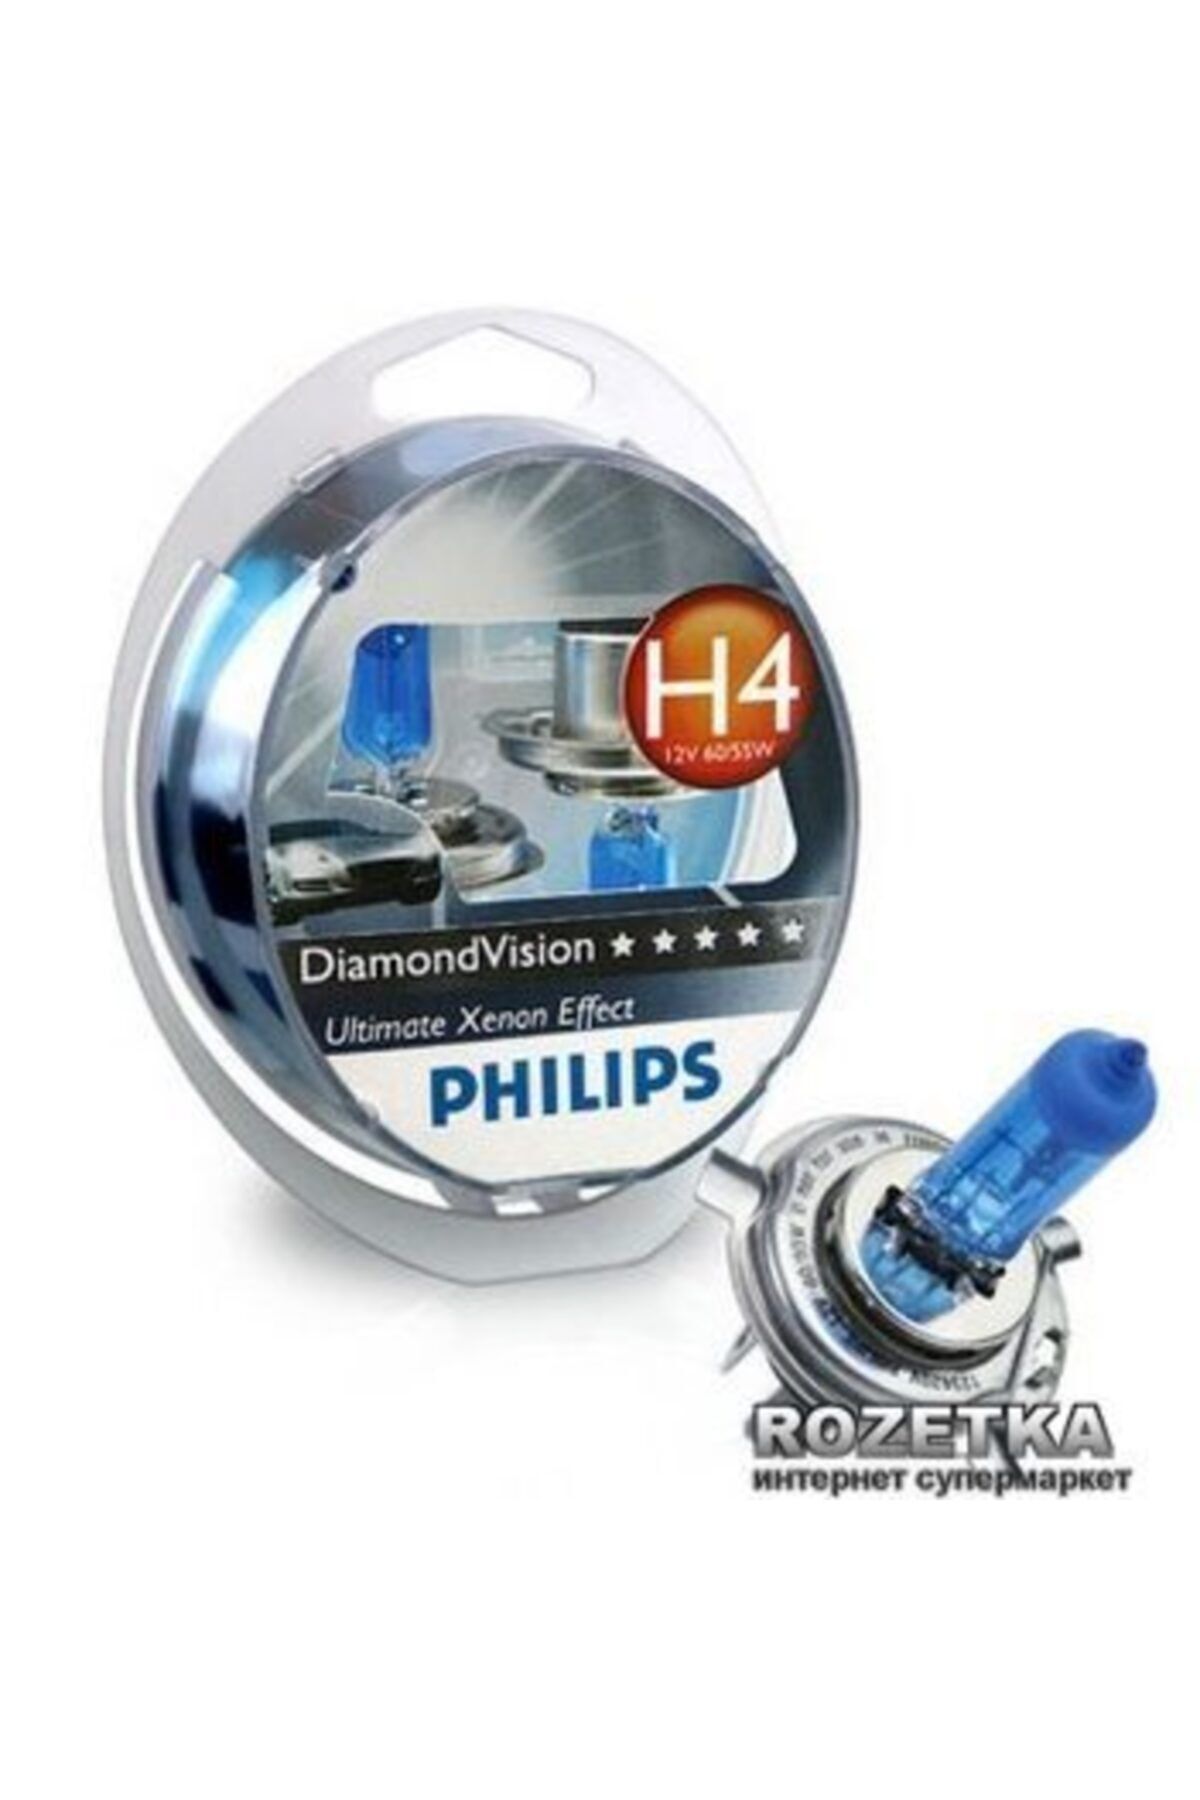 Филипс авто. Лампы Philips h4 55\60w-12v Diamond Vision 5000k. Philips 12v h4 60/55w Diamond Vision. Philips DIAMONDVISION h4 12v 60/55w 2шт. Лампа автомобильная Philips h4 12v 60/55w 5000k DIAMONDVISION 12342dv.